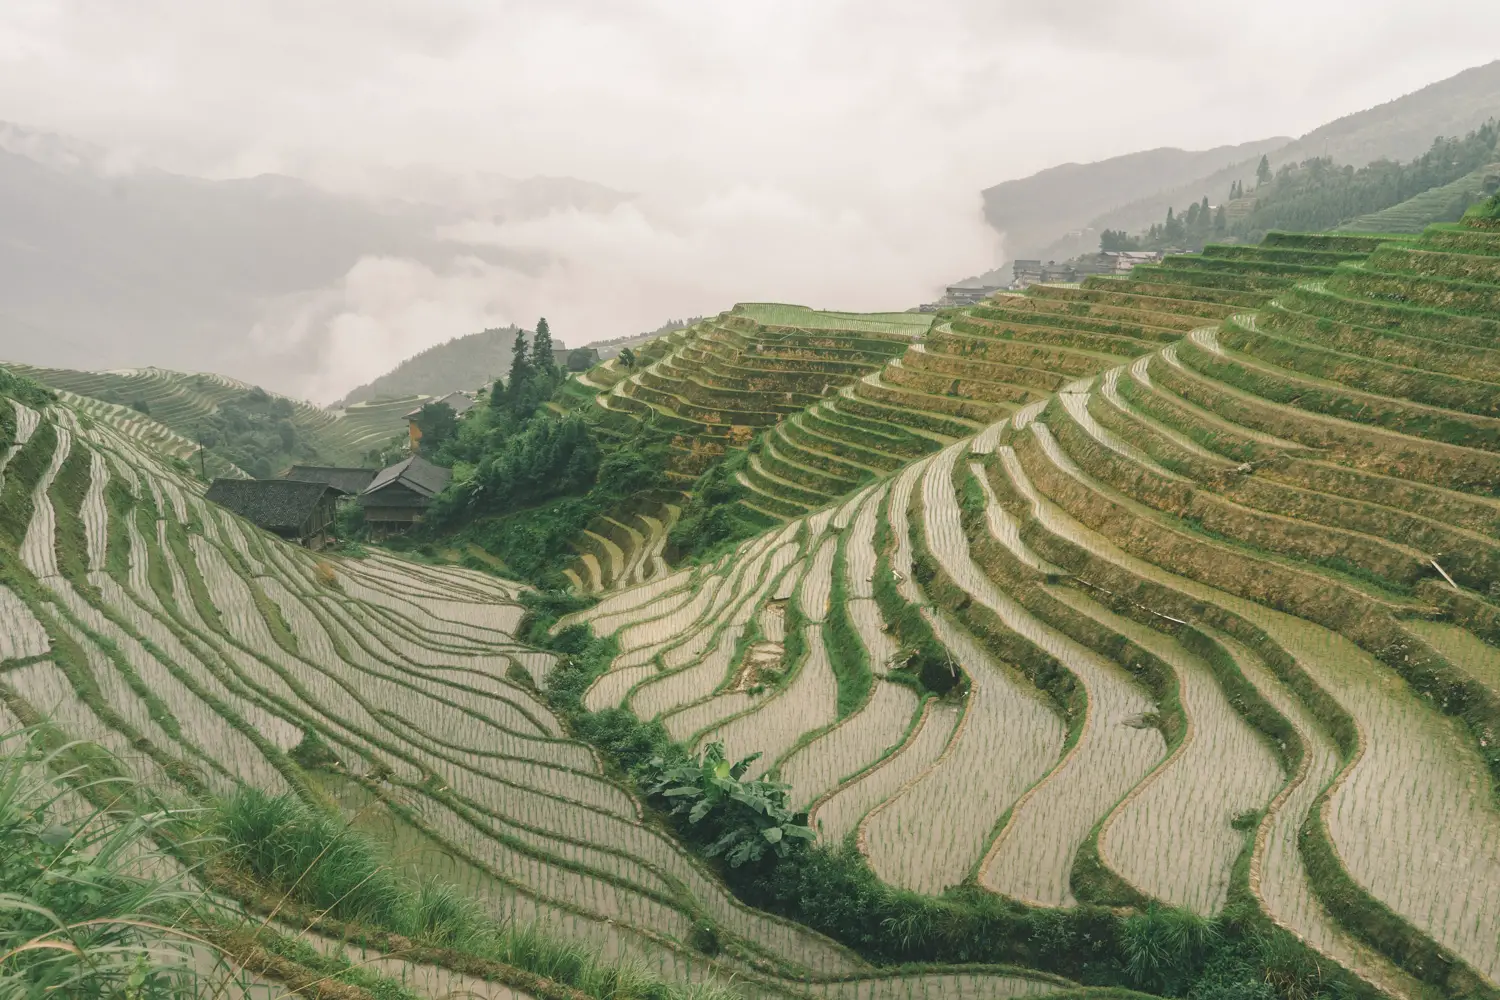 The Longji Rice Terraces near Guilin 